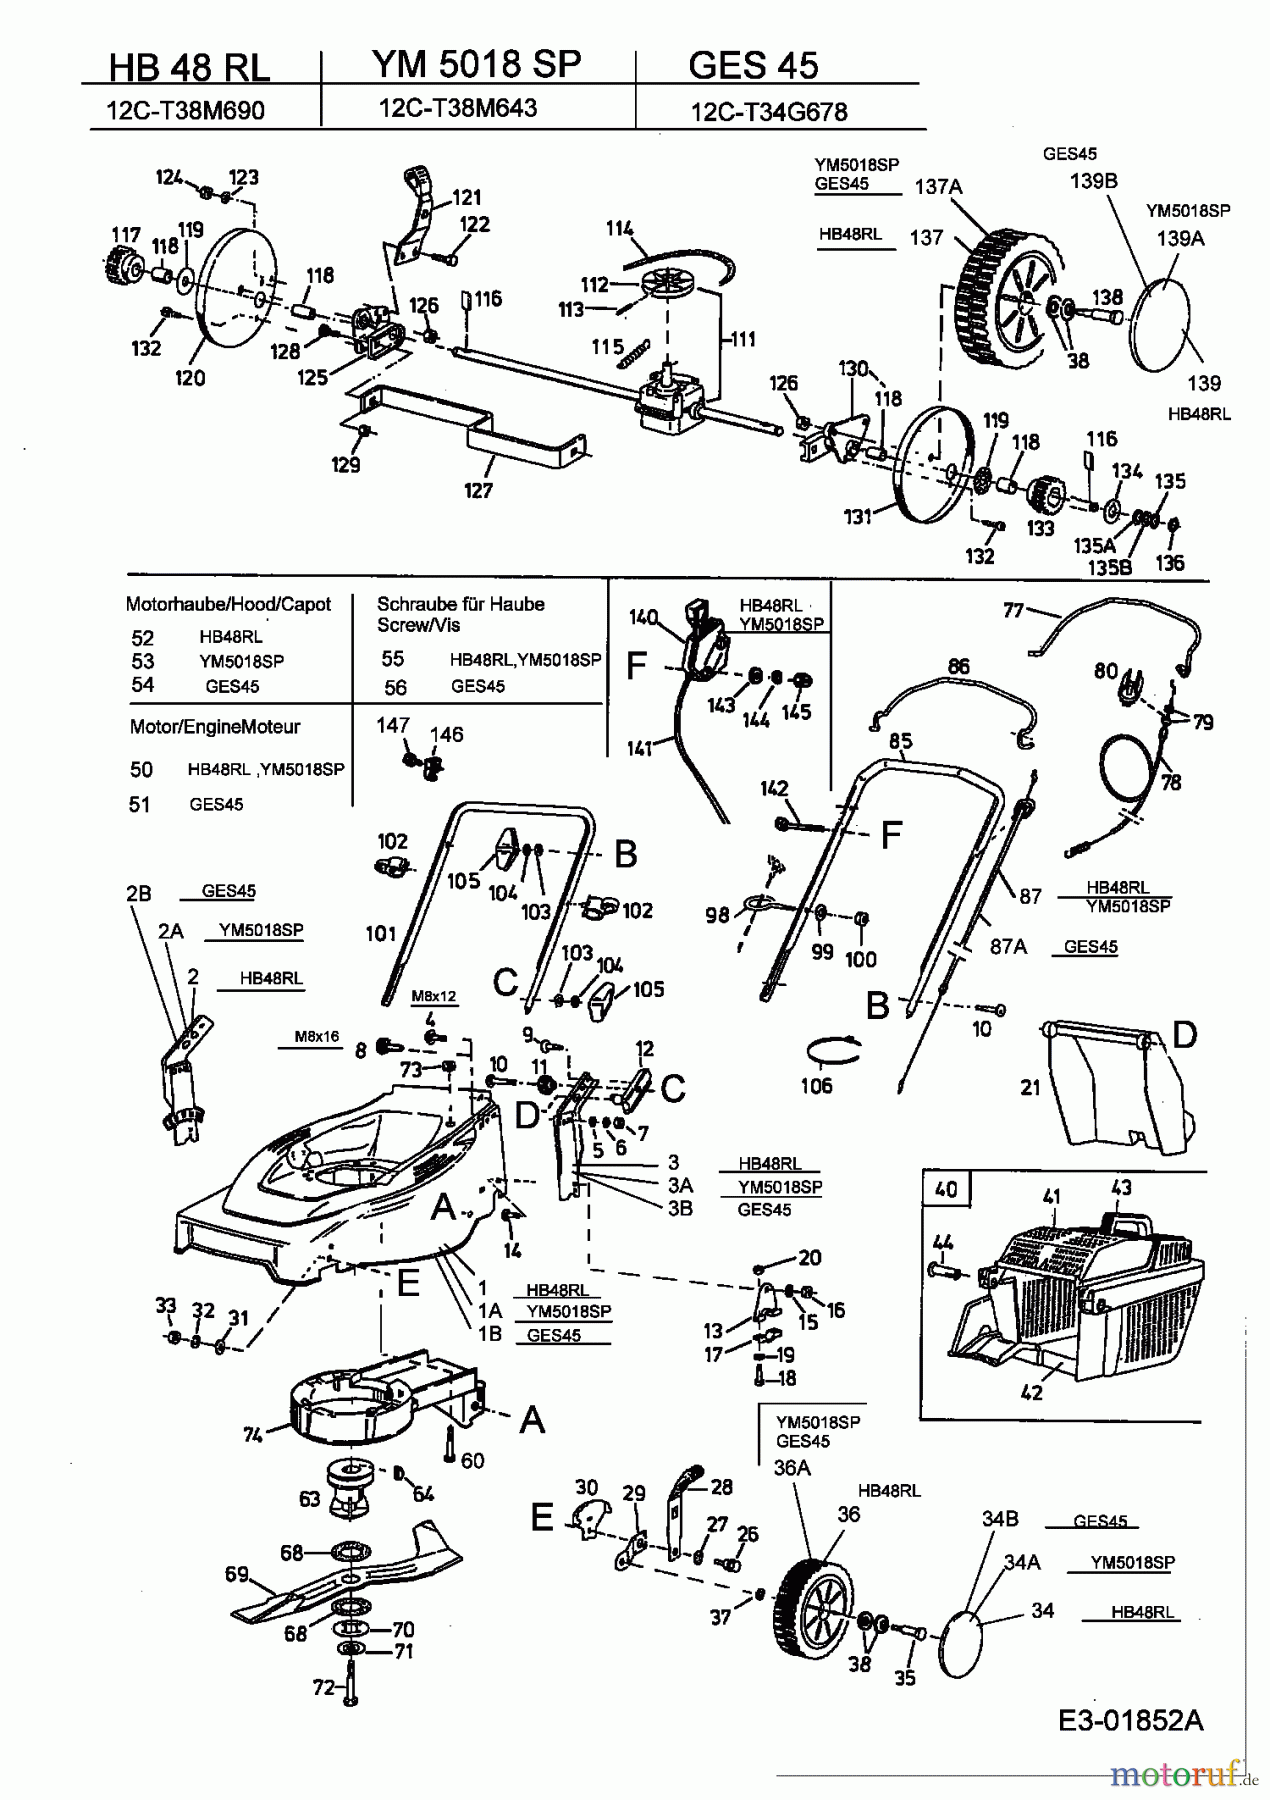  MTD Petrol mower self propelled GES 45 12C-T34G678  (2003) Basic machine